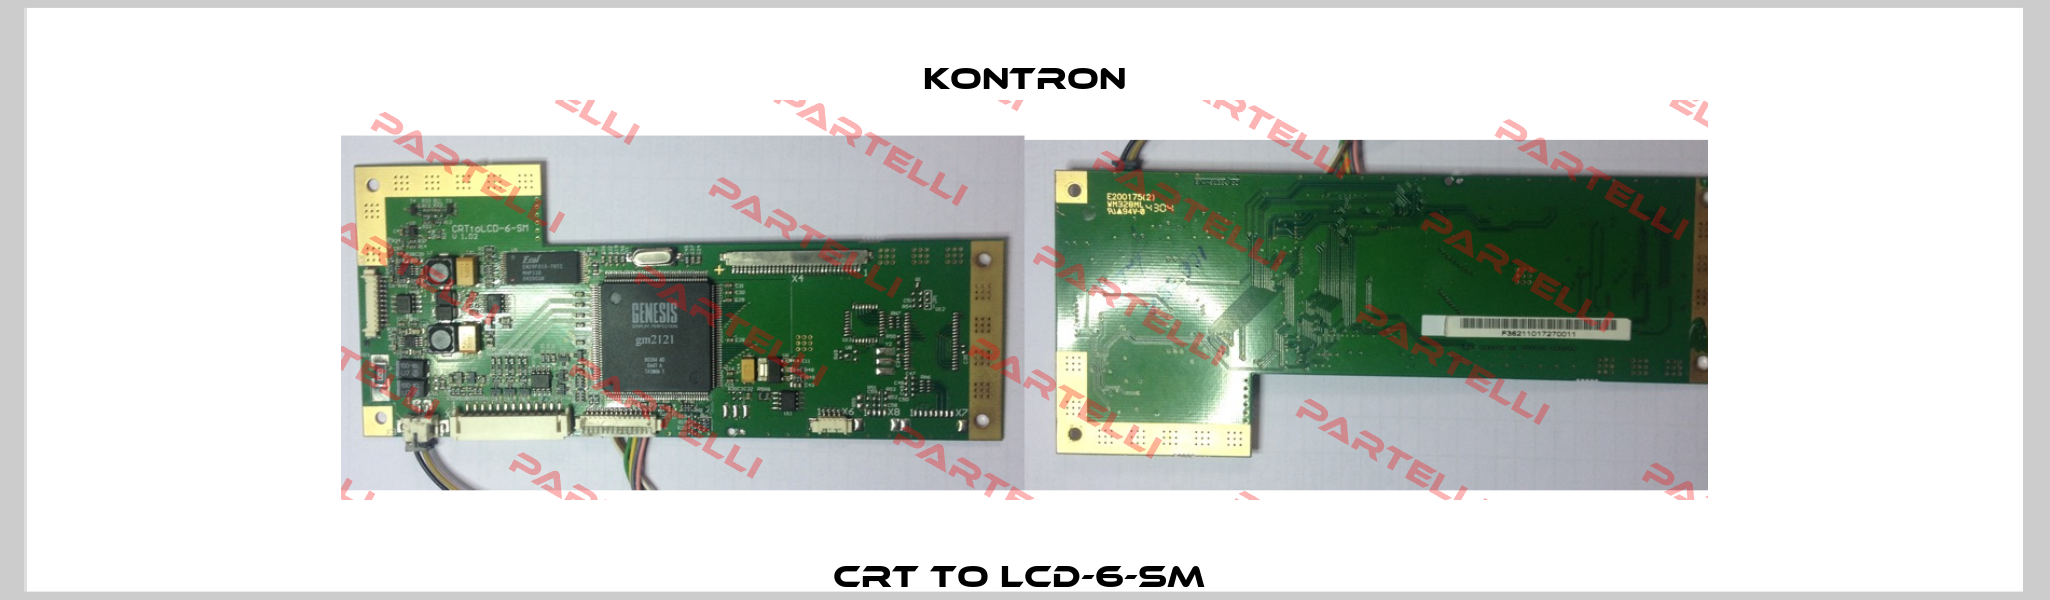 CRT to LCD-6-SM  Kontron